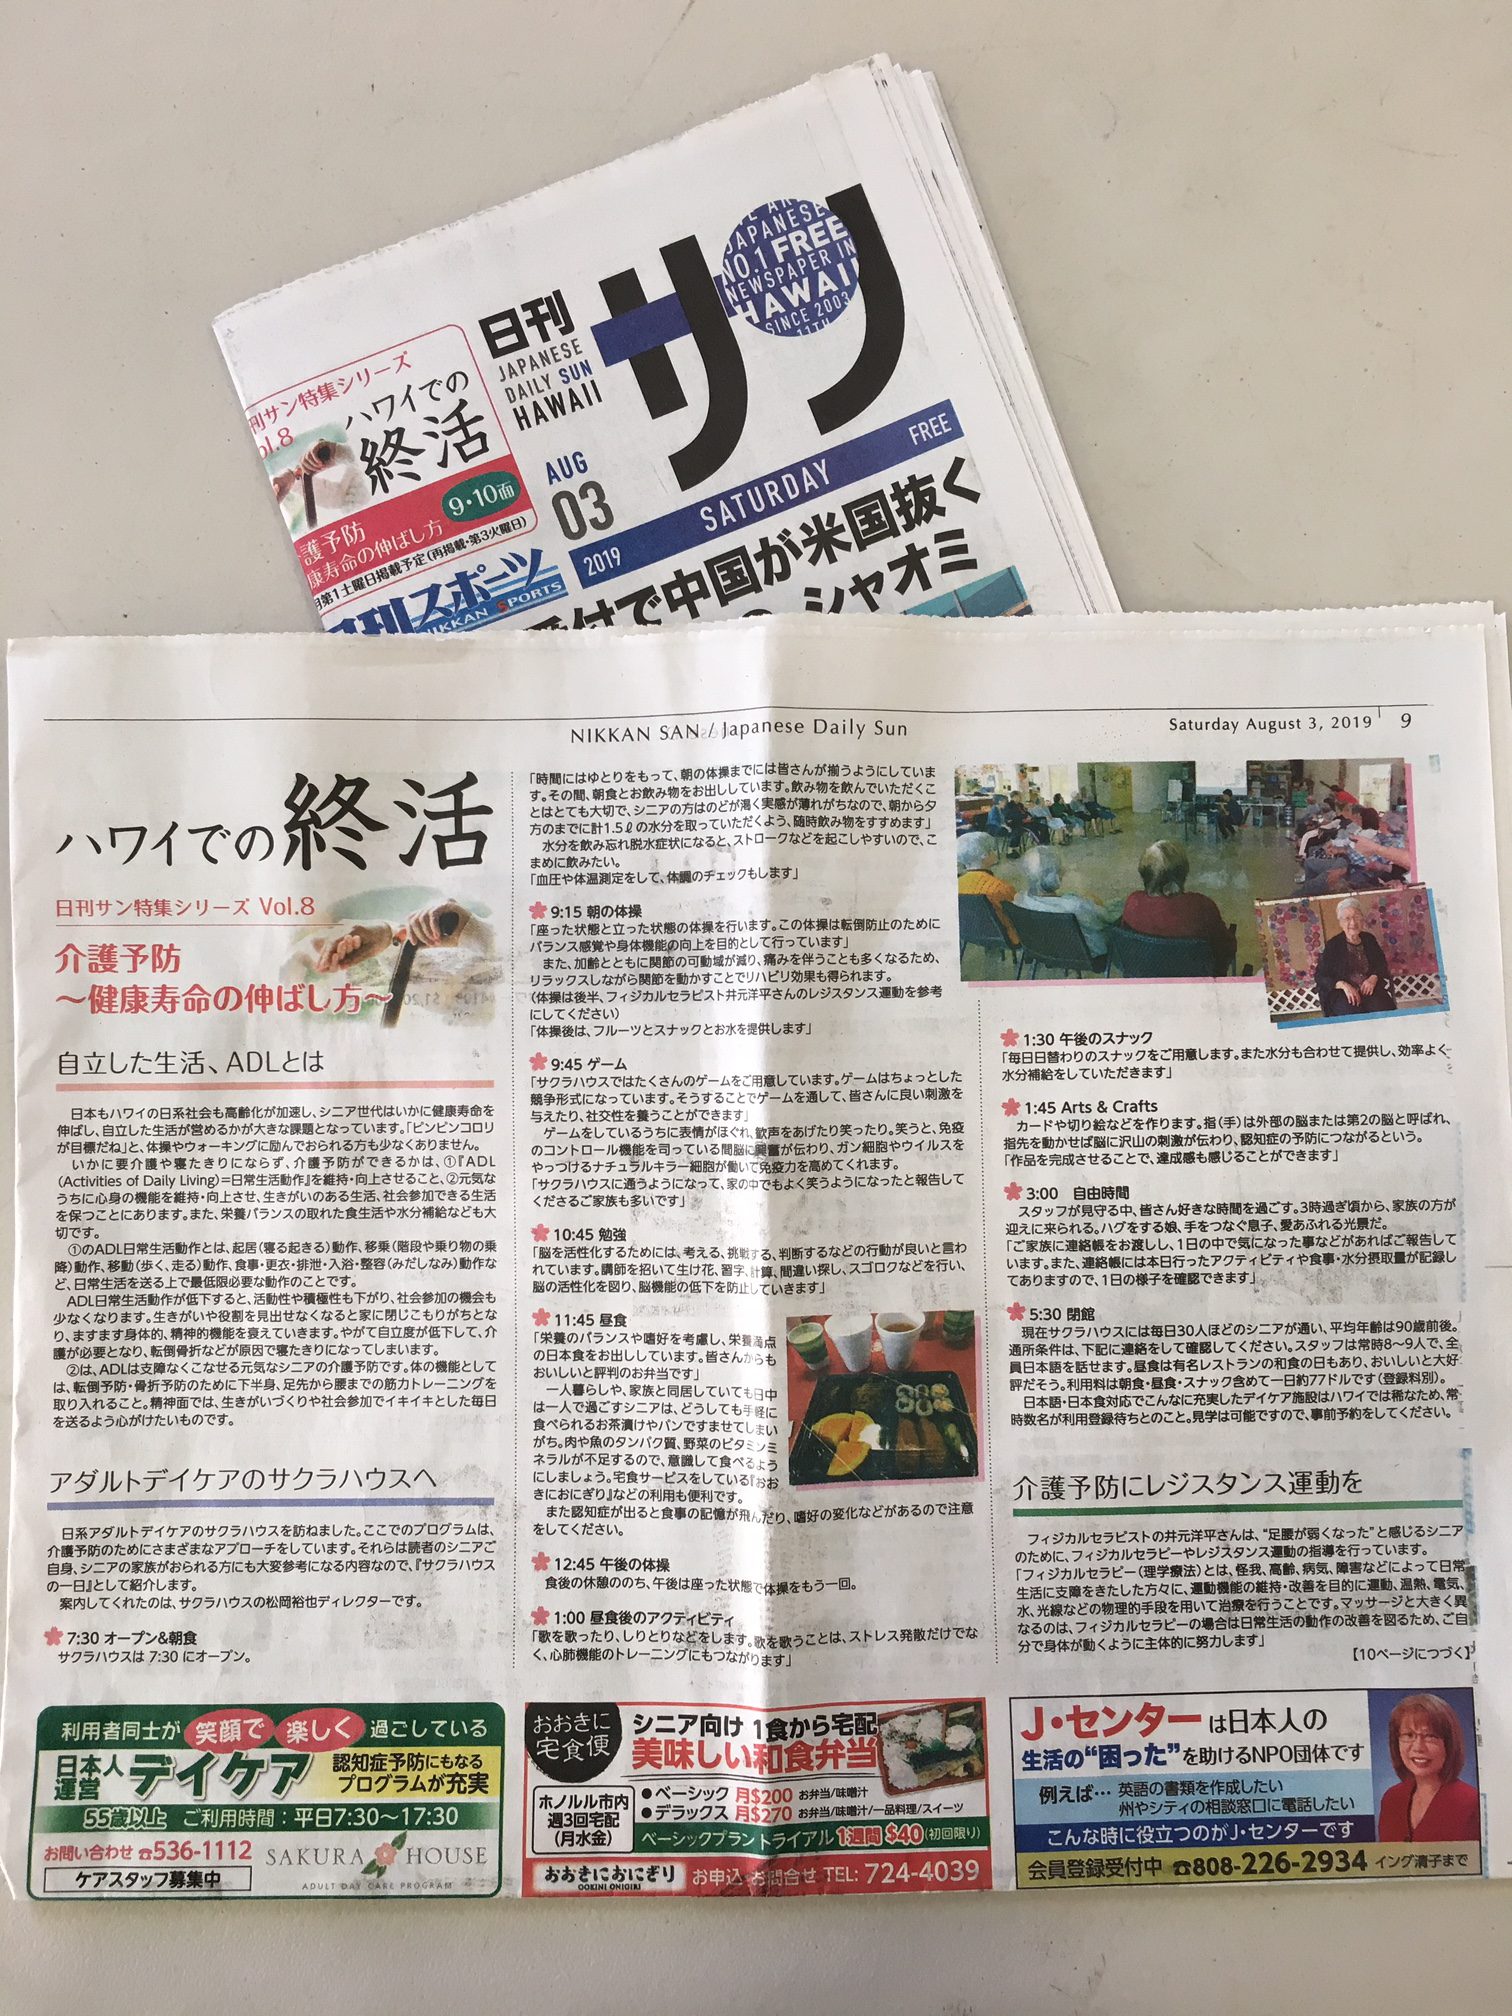 Hawaiiのsakurahouseが 地元新聞に特集されました 愛知県を中心に調剤薬局を展開するファインメディカル